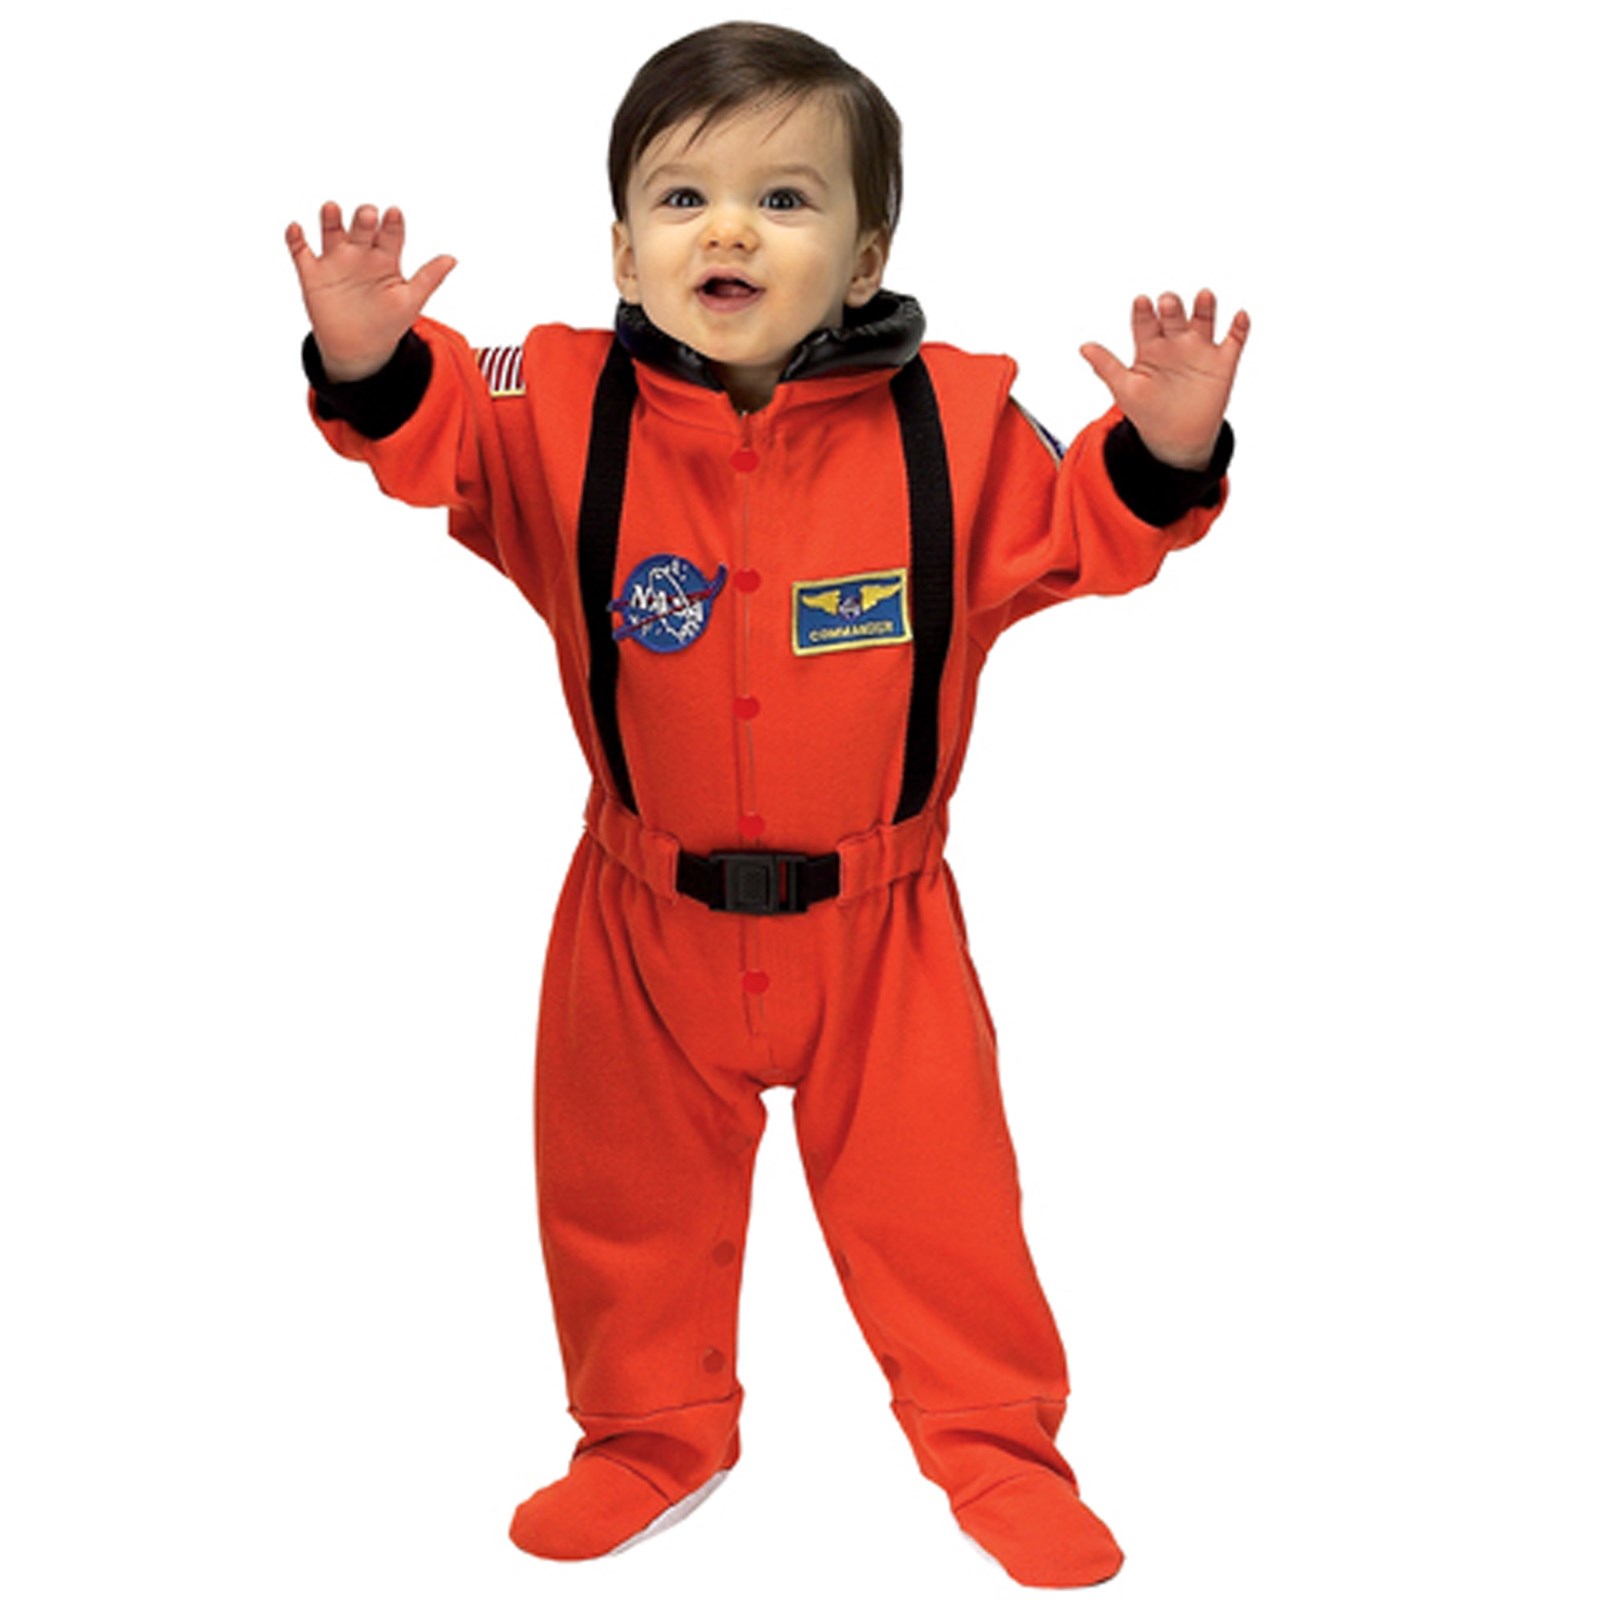 NASA Jr. Astronaut Suit Orange Infant Costume